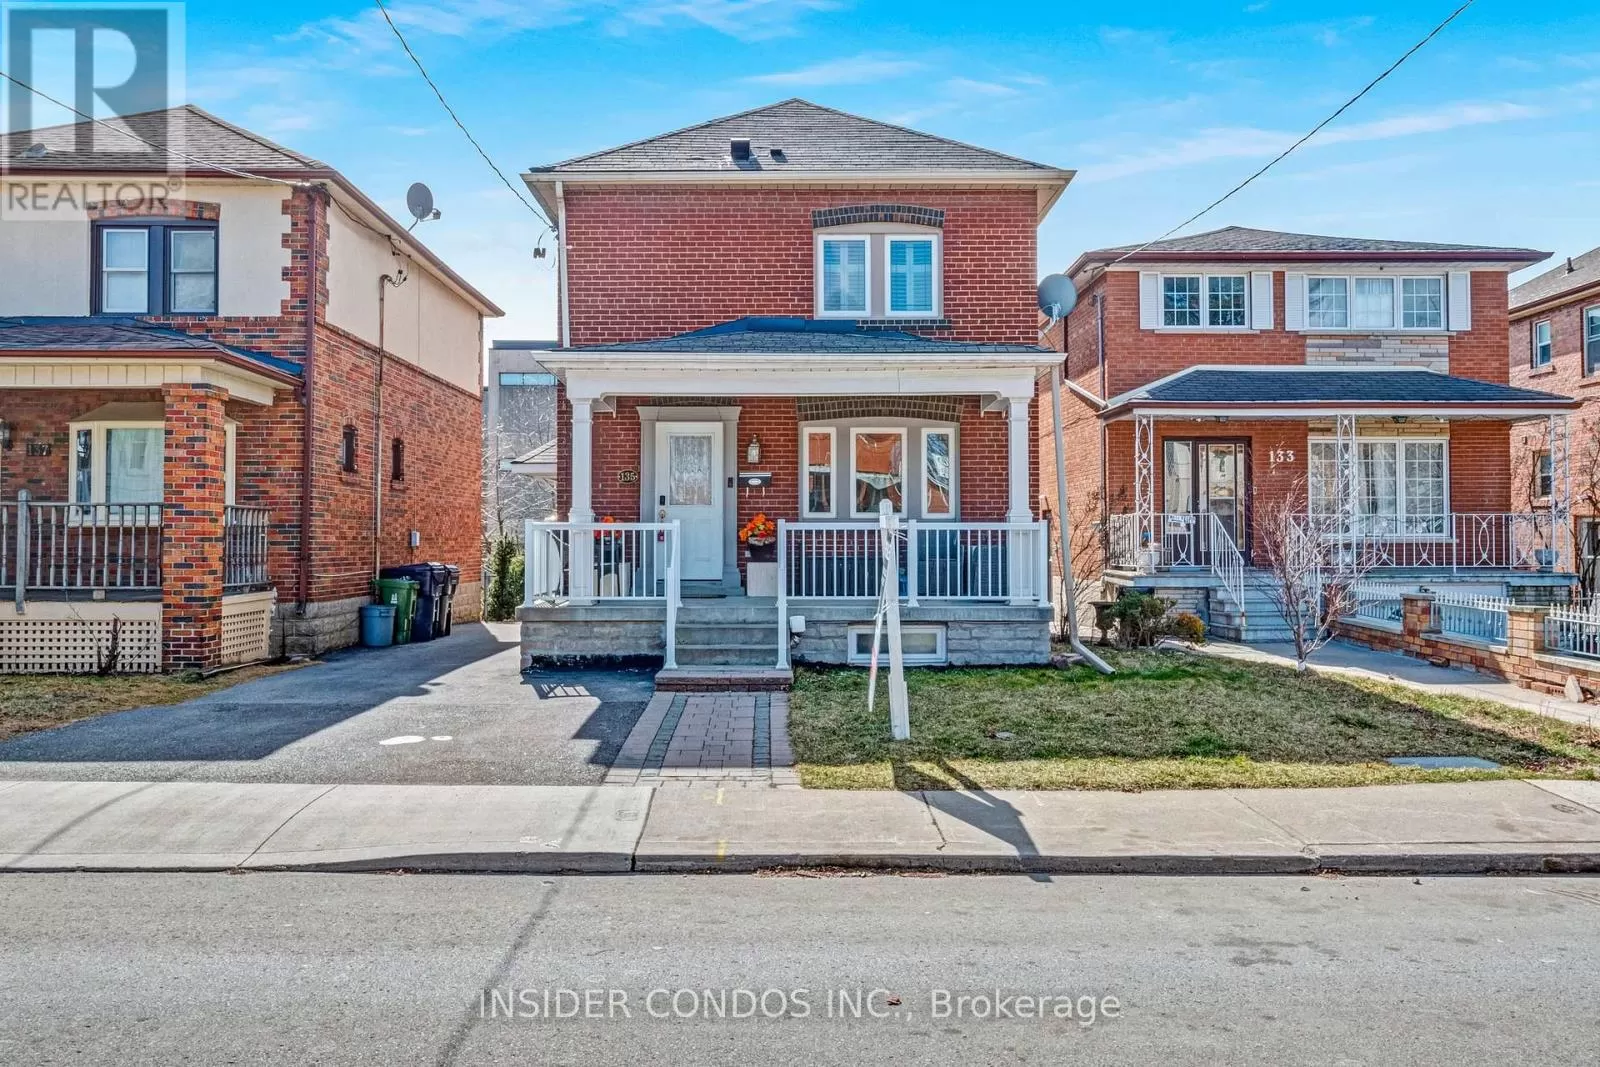 House for rent: 135 William Street, Toronto, Ontario M9N 2G8